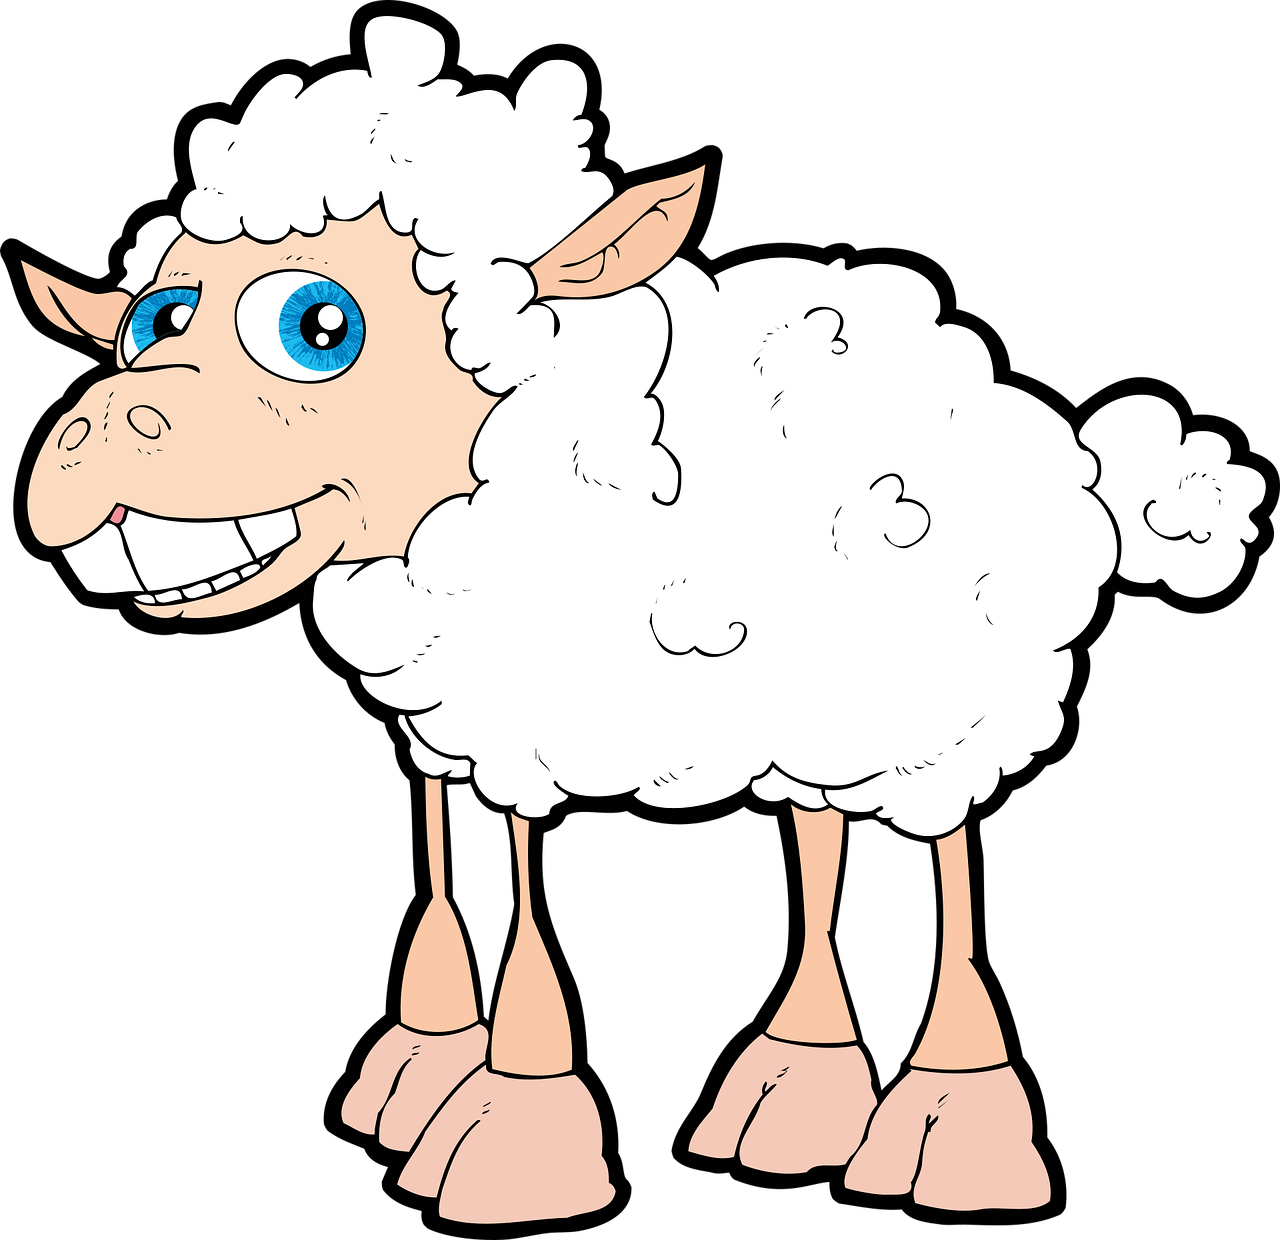 a cartoon sheep with blue eyes on a black background, an illustration of, mingei, 4 legs, all teeth, cartoon still, clipart